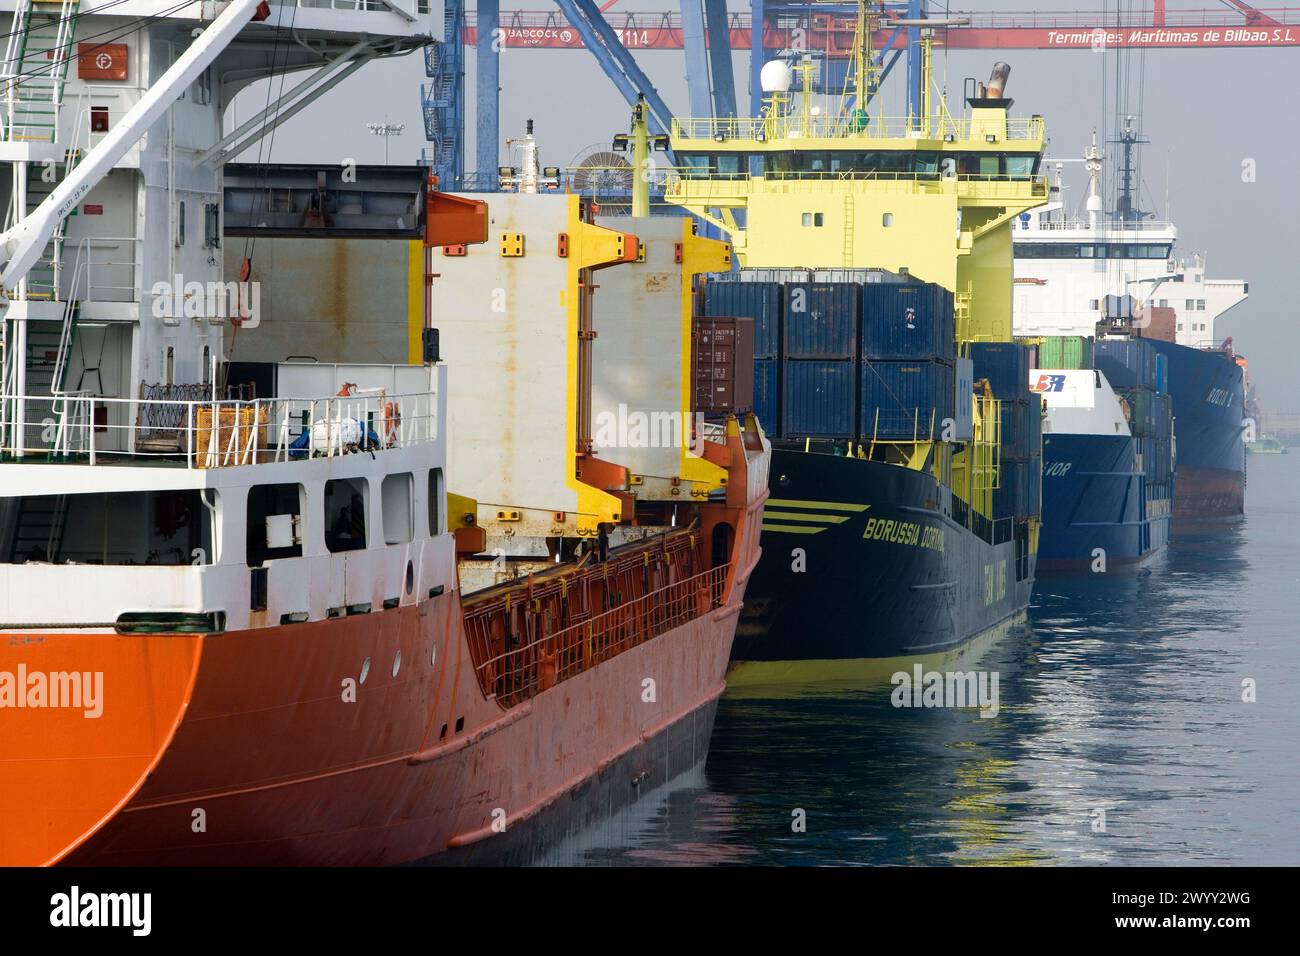 Loading cargo ships, Port of Bilbao, Santurtzi. Biscay, Euskadi, Spain. Stock Photo